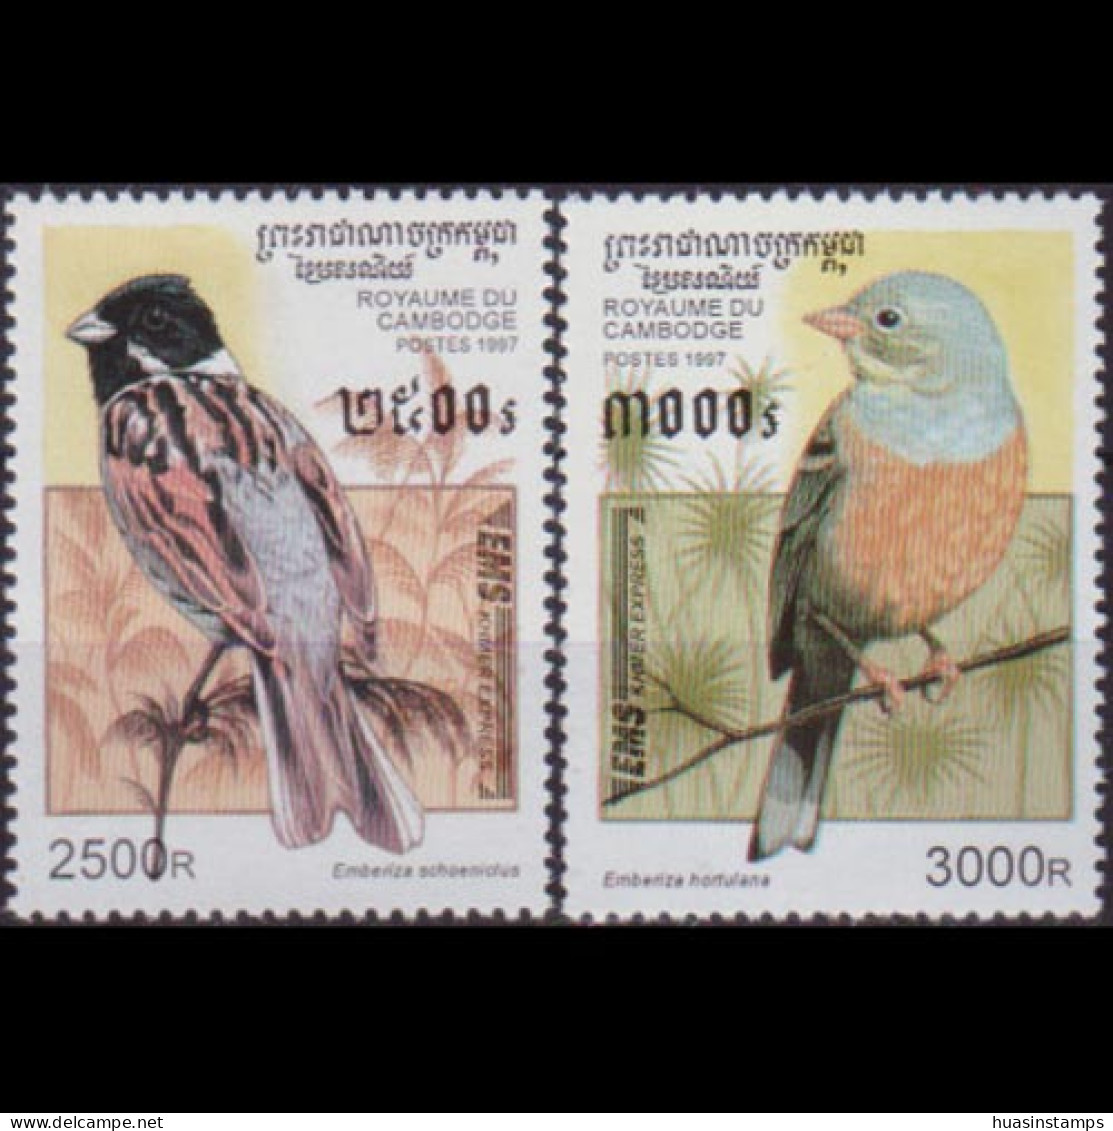 CAMBODIA 1997 - Scott# 1602-3 Birds 2500-3000r MNH - Cambodge